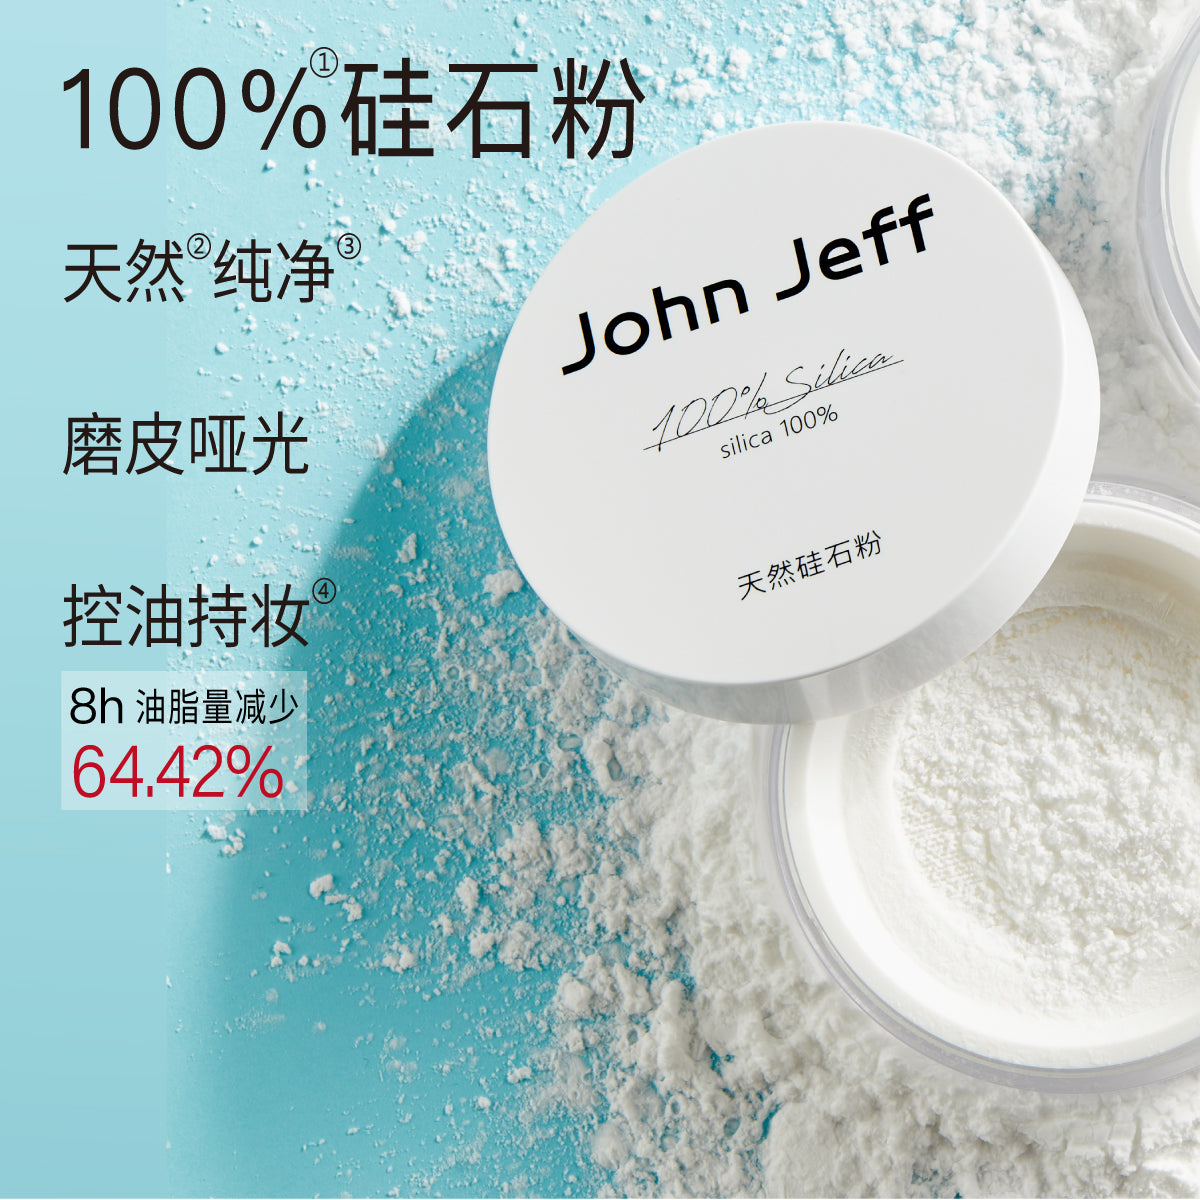 John Jeff Natural Silica Oil Control Loose Powder 8g John Jeff天然硅石控油散粉